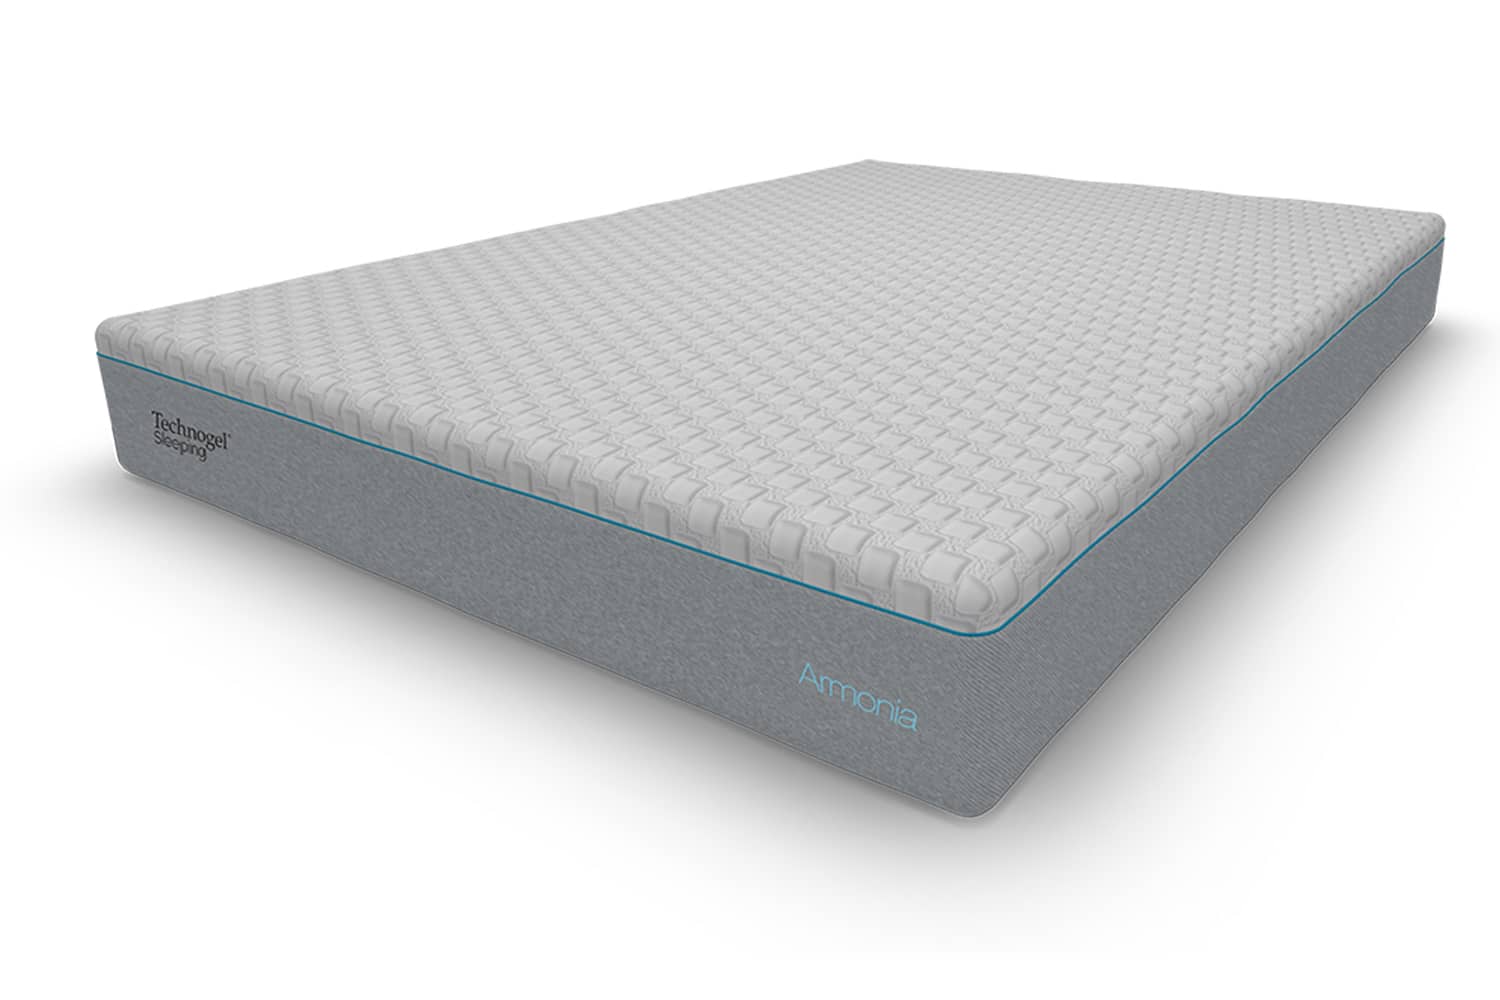 technogel mattress price uk